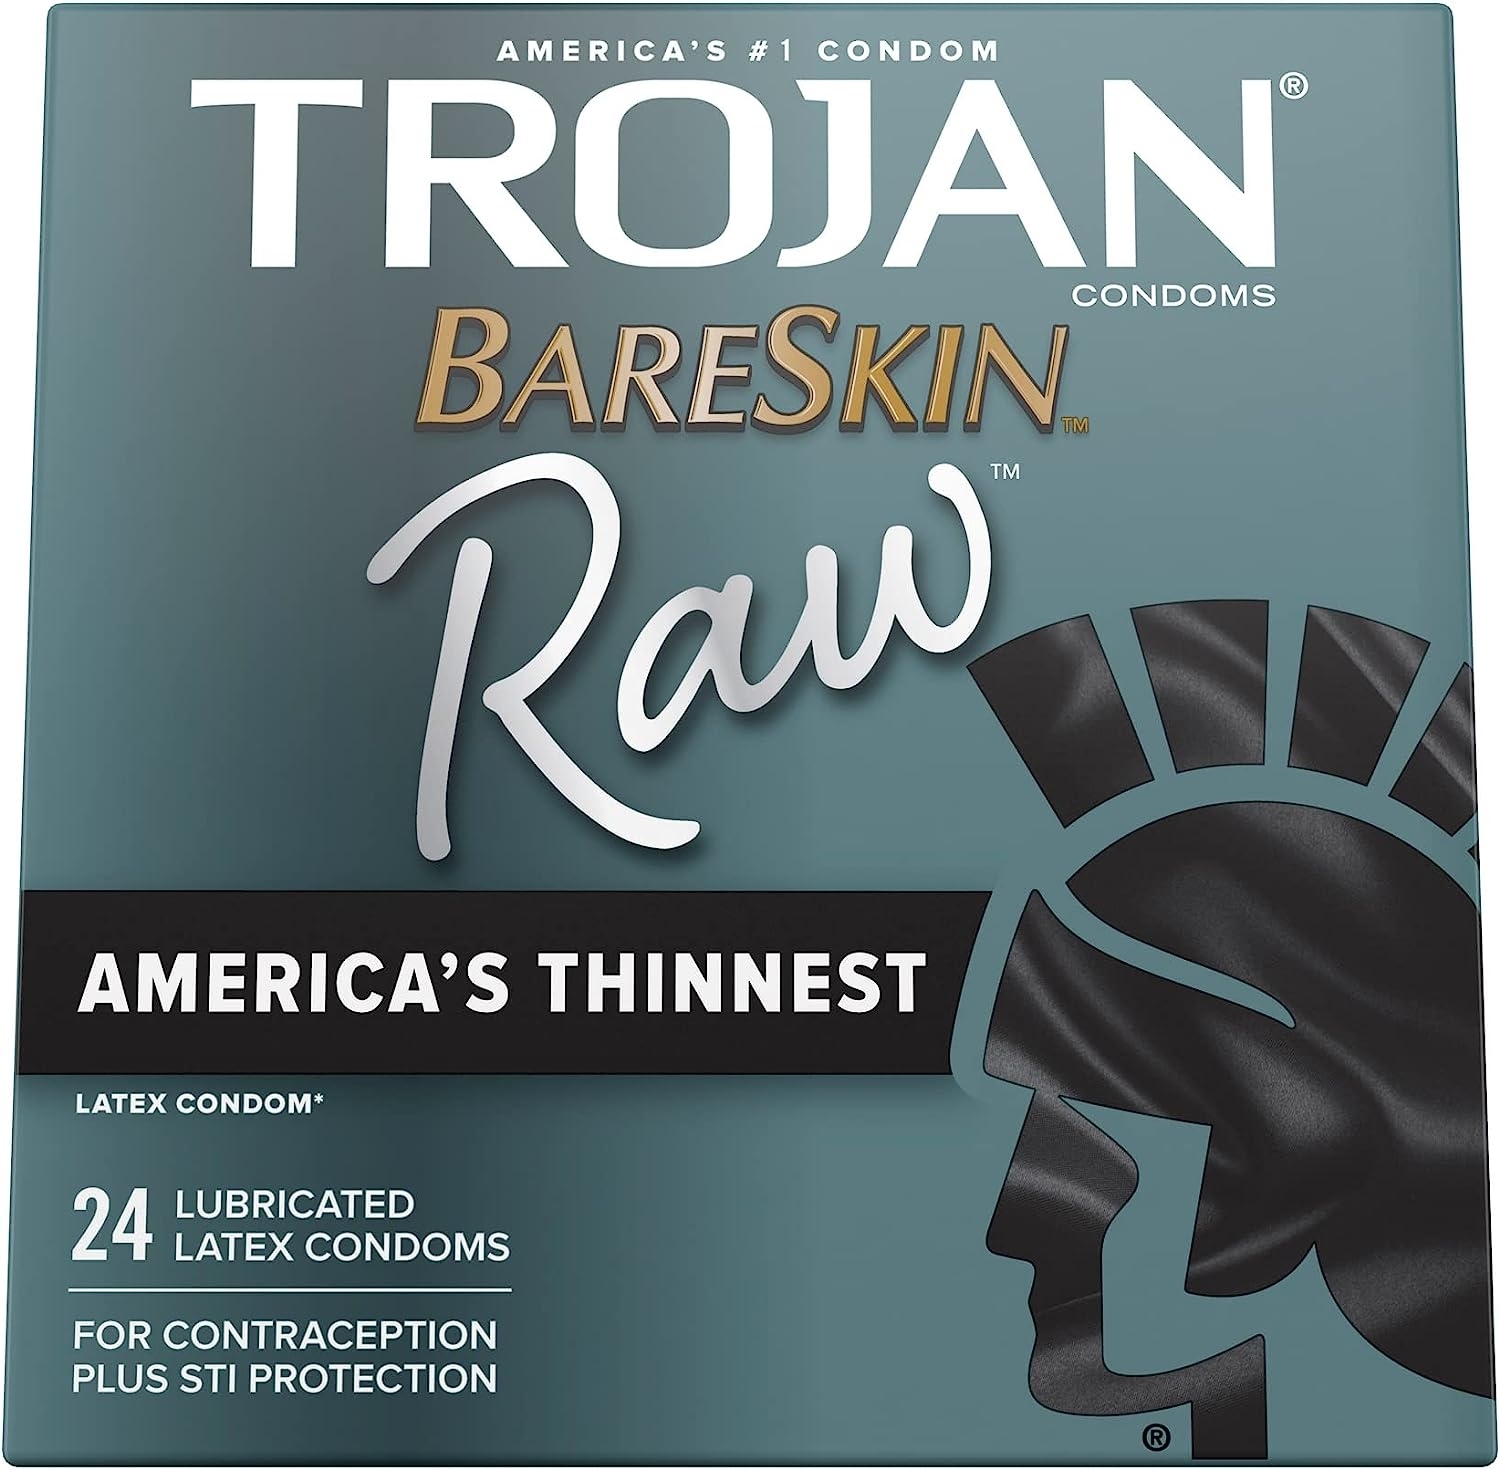 Trojan Bareskin Raw condom label